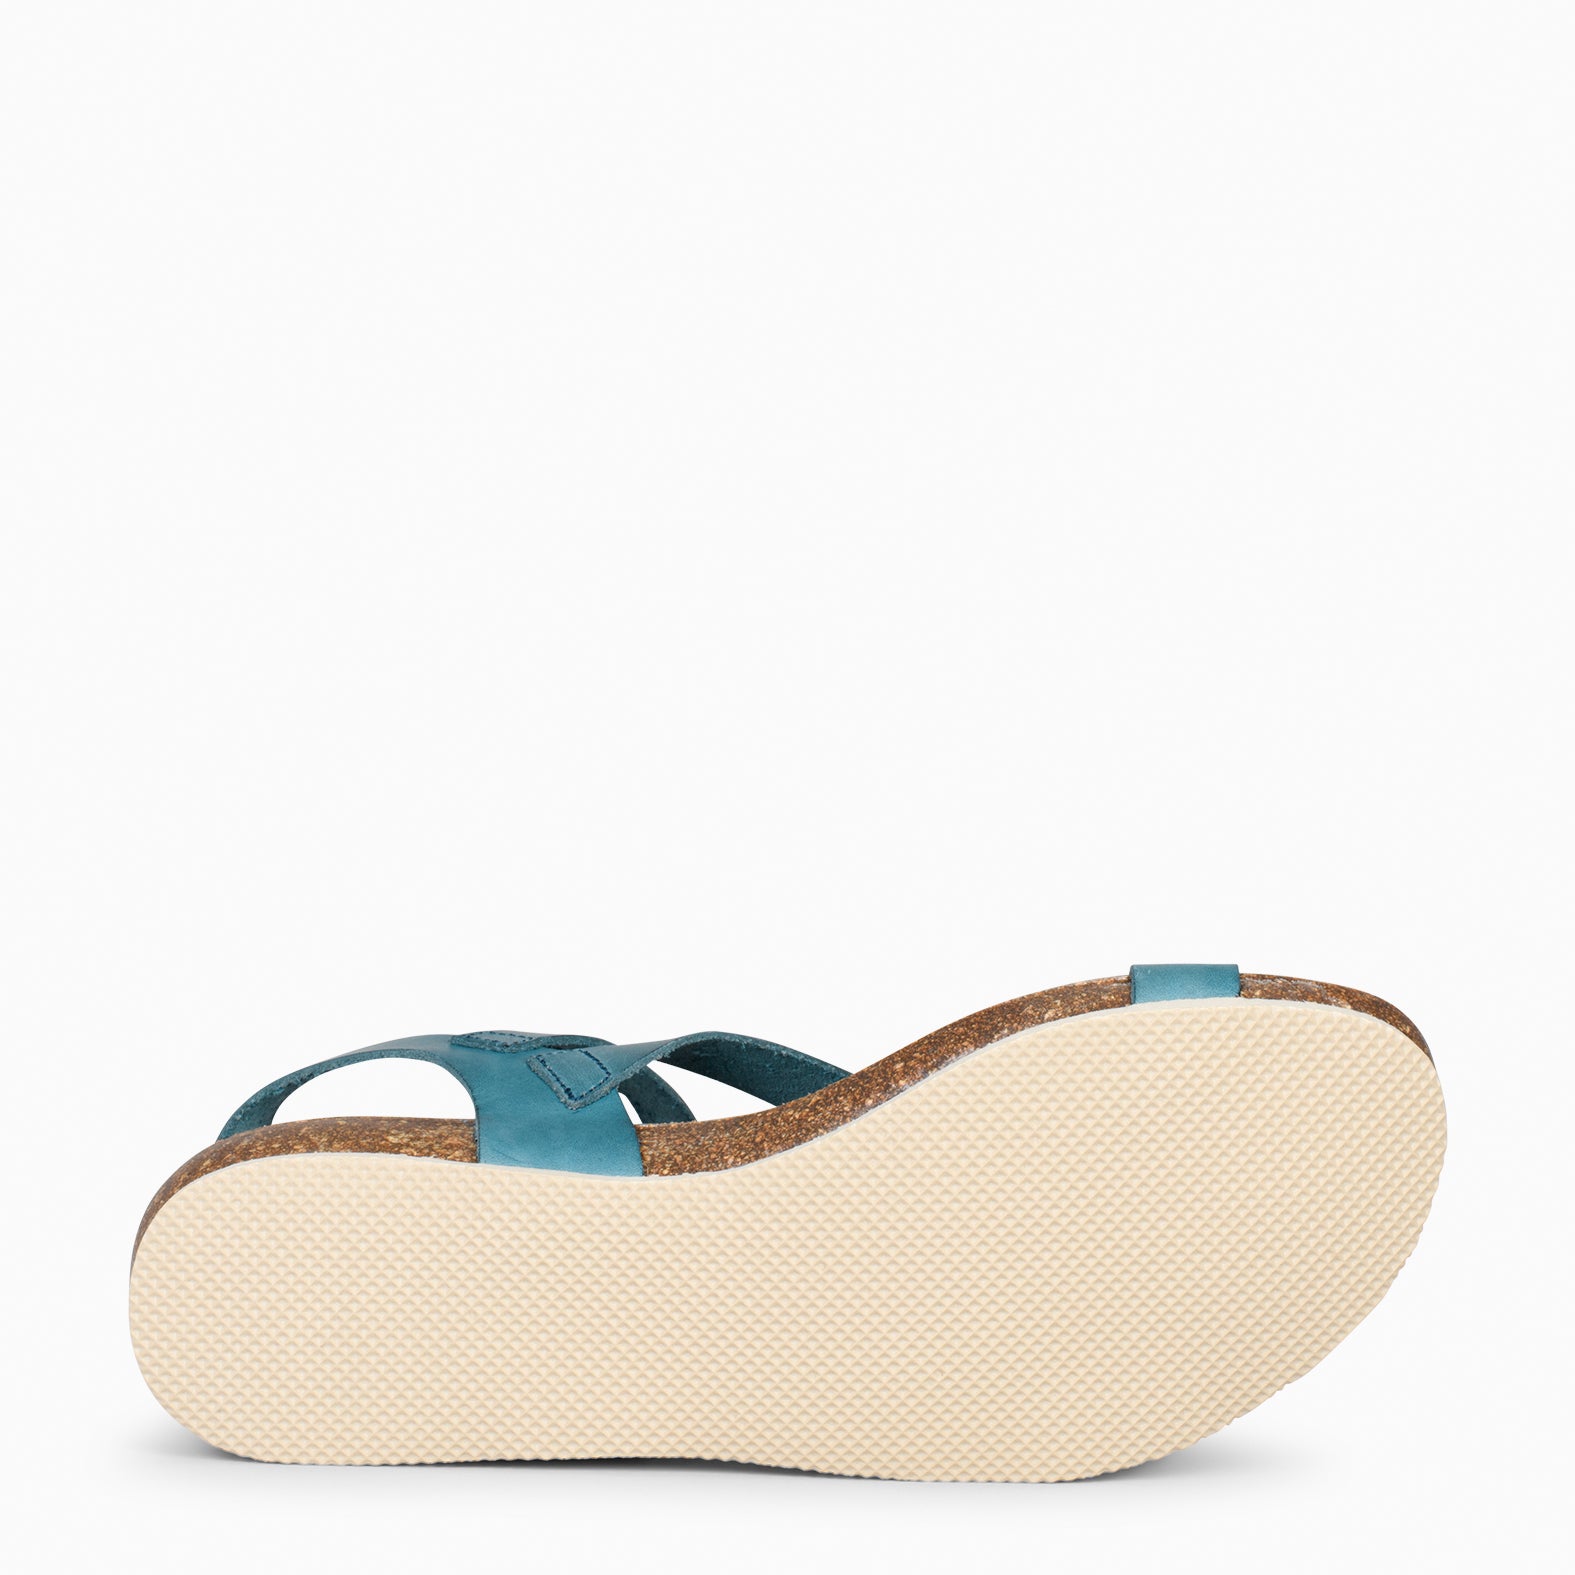 LIS – BLUE BIO leather sandals